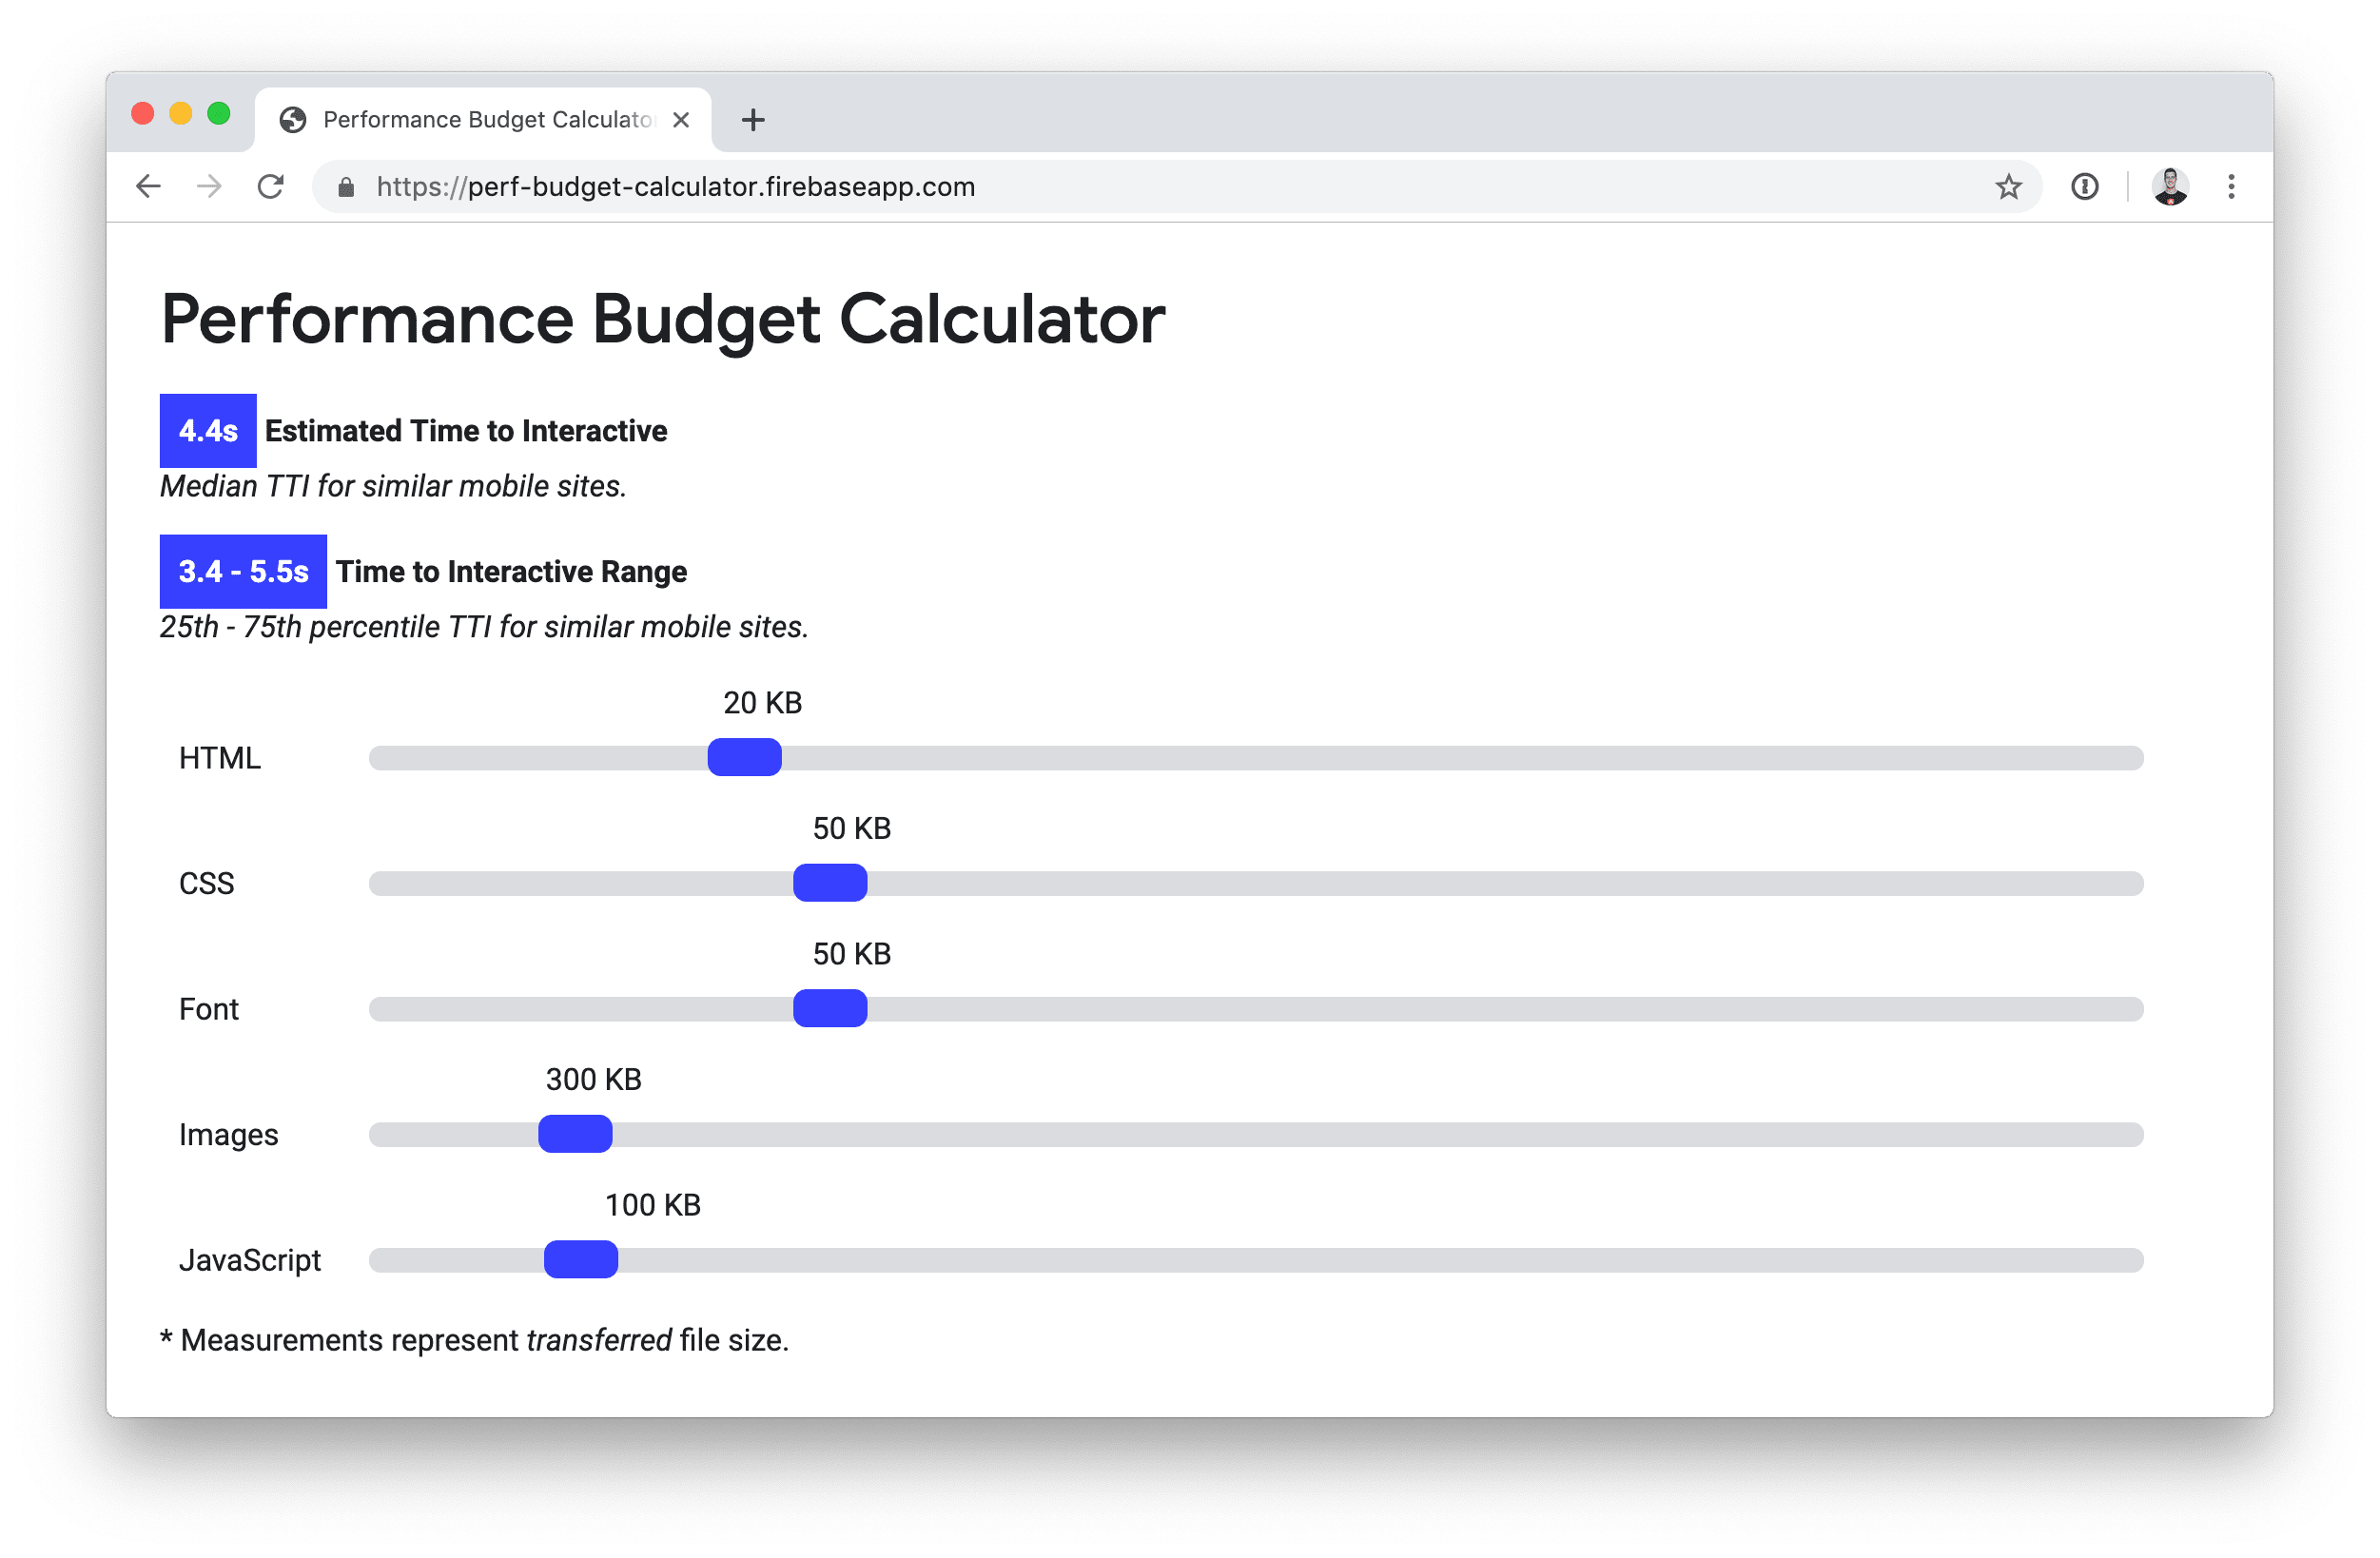 Budget calculator